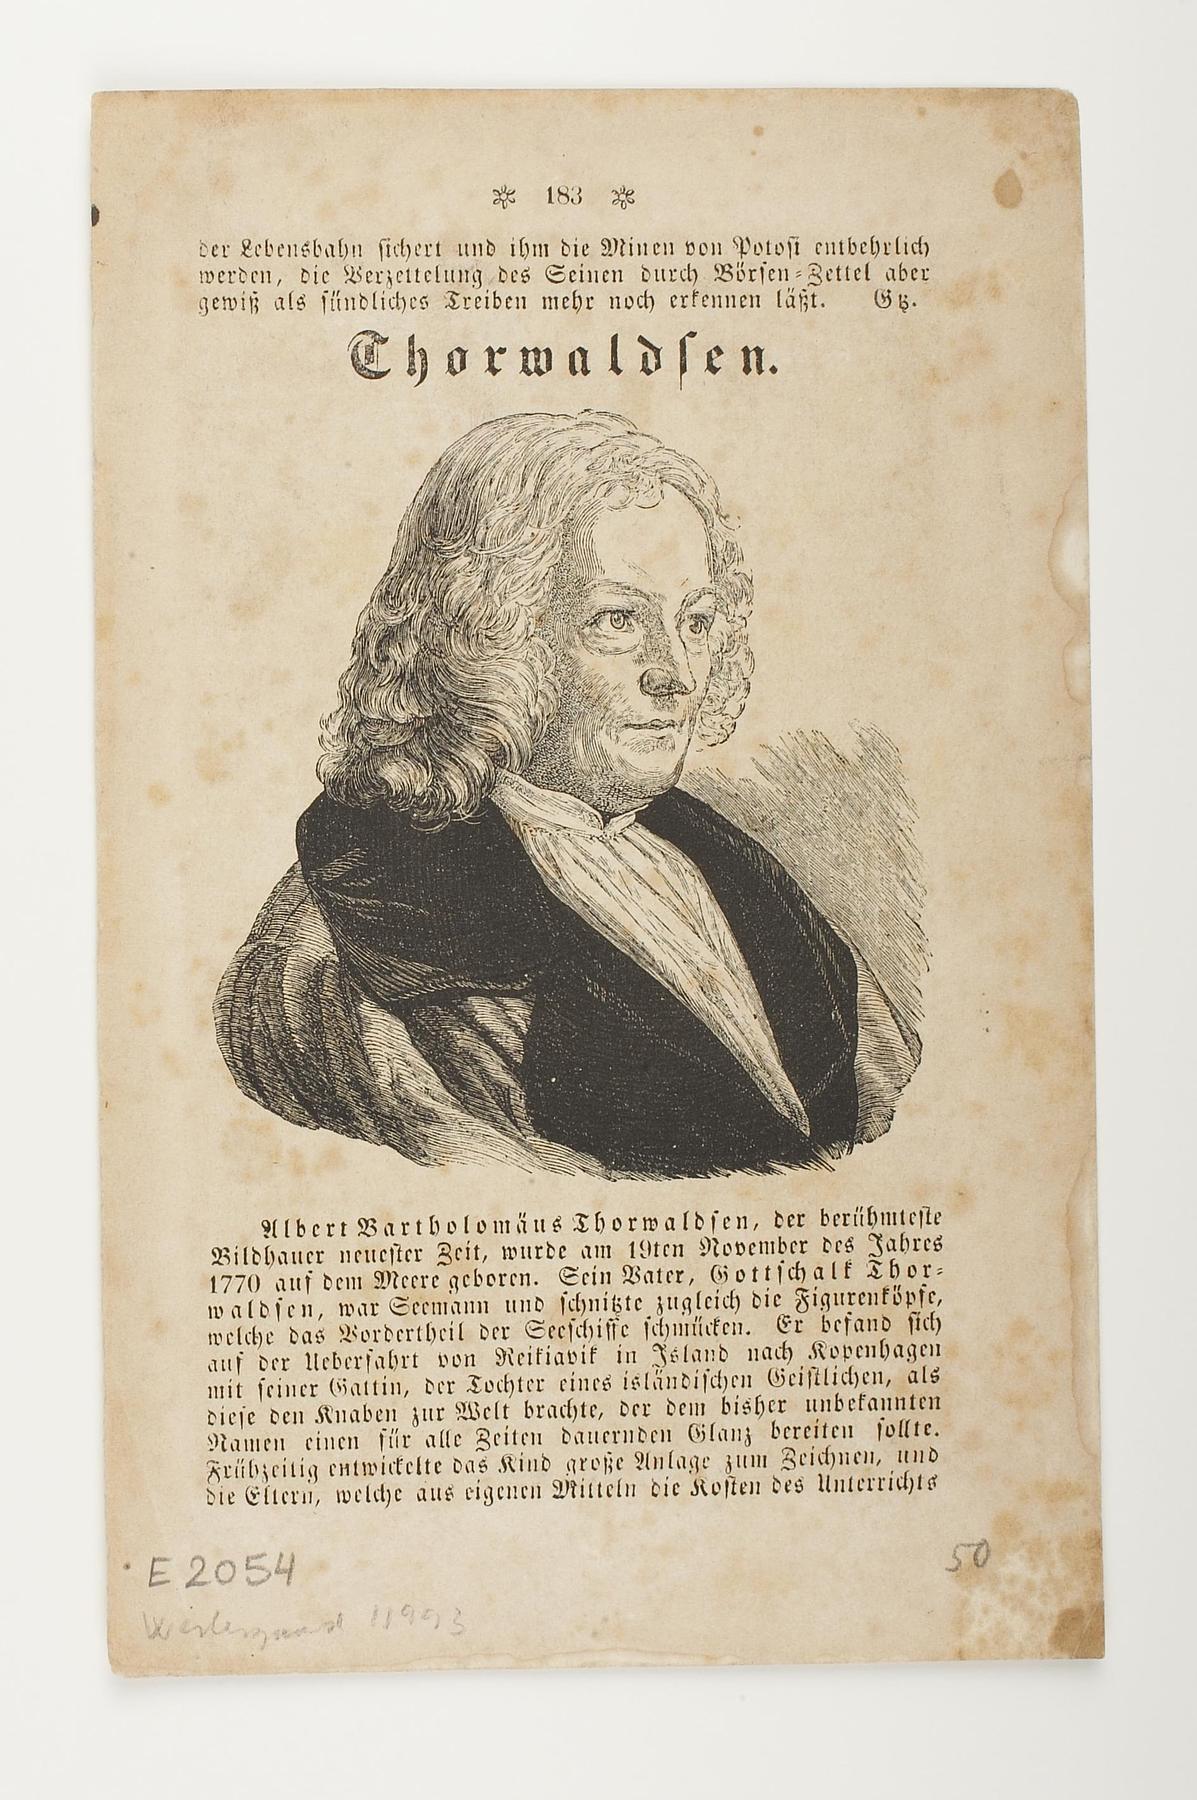 Portrait of Thorvaldsen, E2054